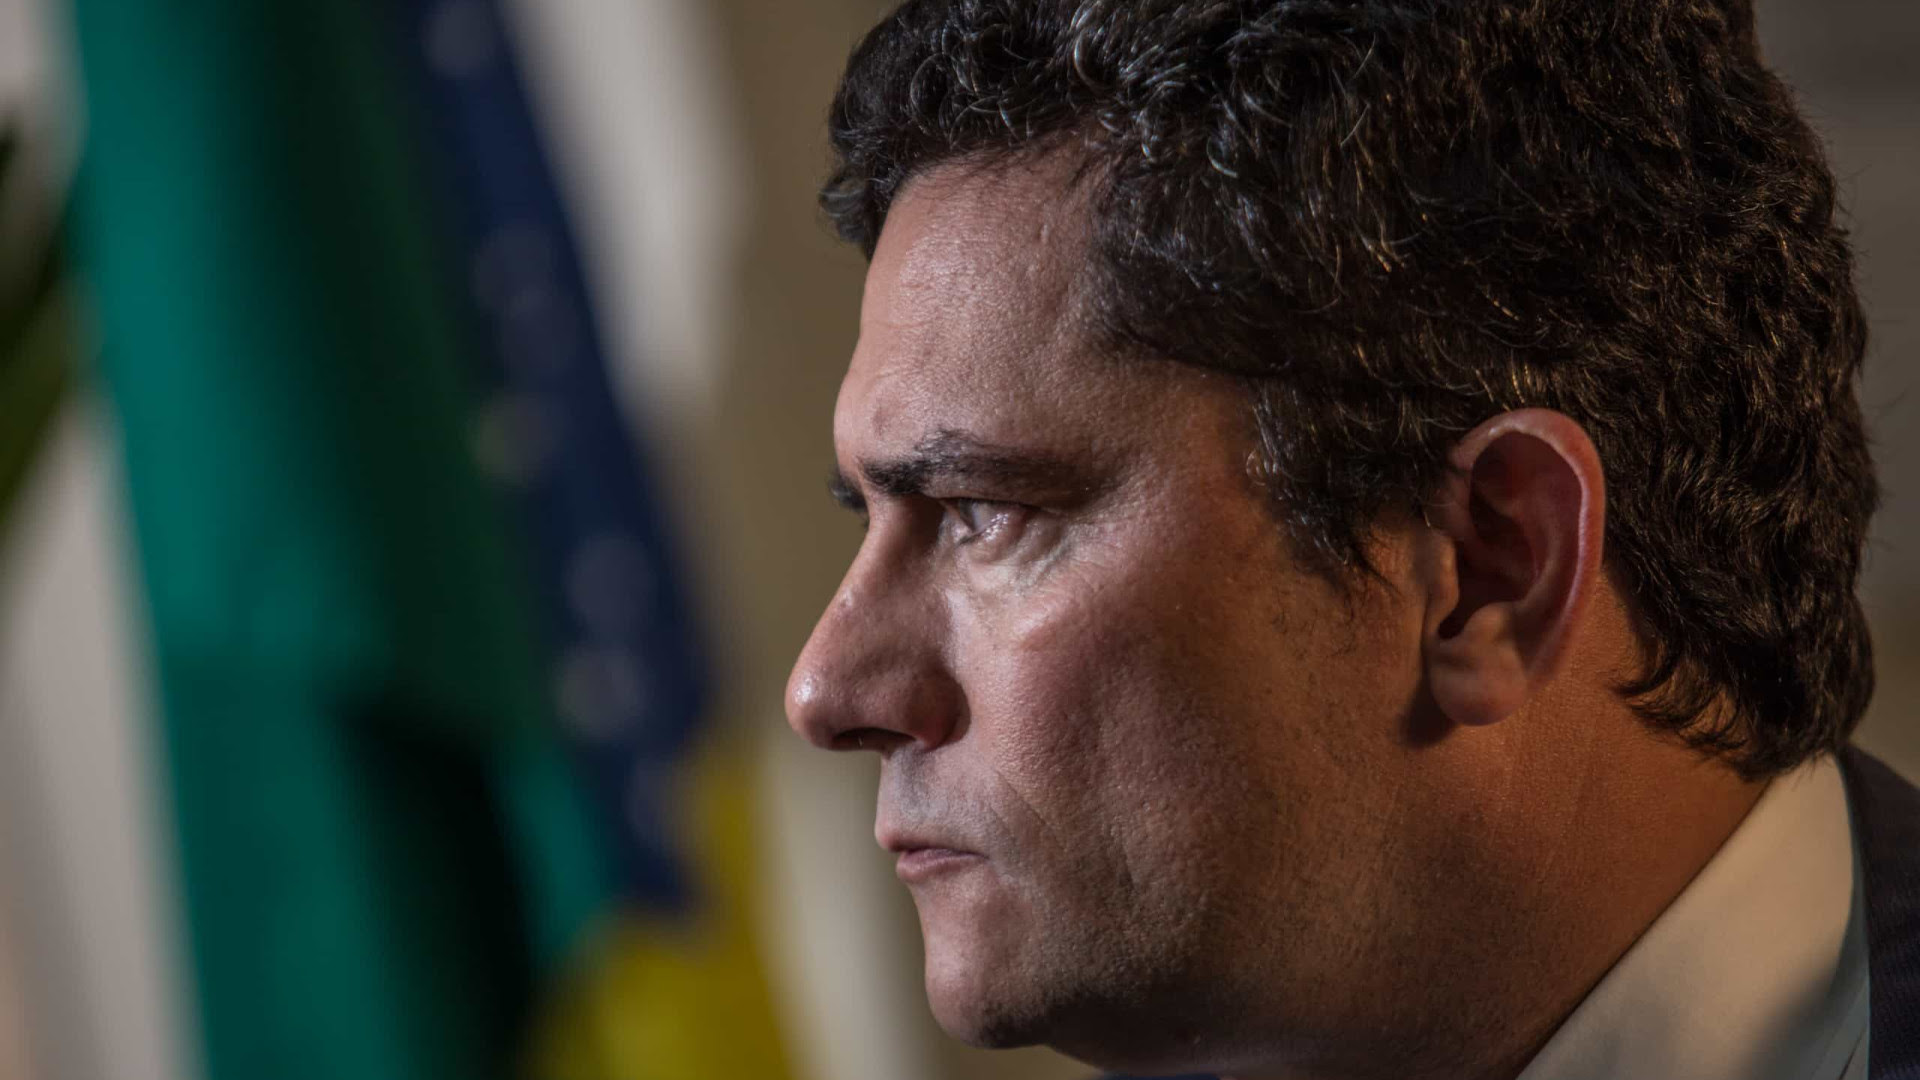 Ídolo dos antipetistas, Moro ameaça reino de Bolsonaro sobre a direita